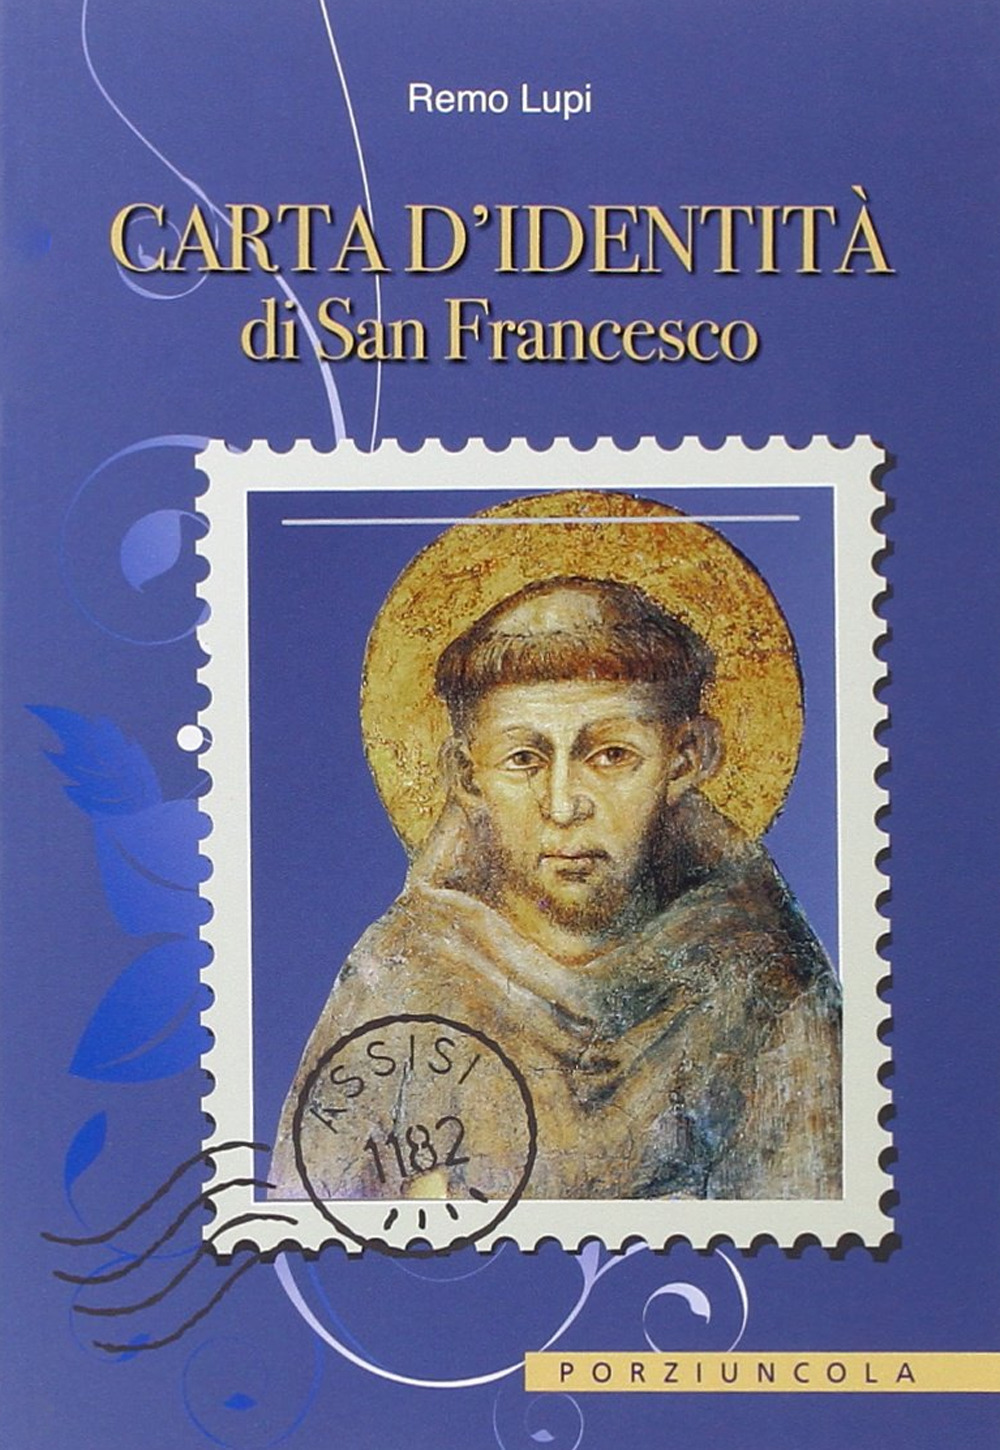 Image of Carta d'identità di san Francesco